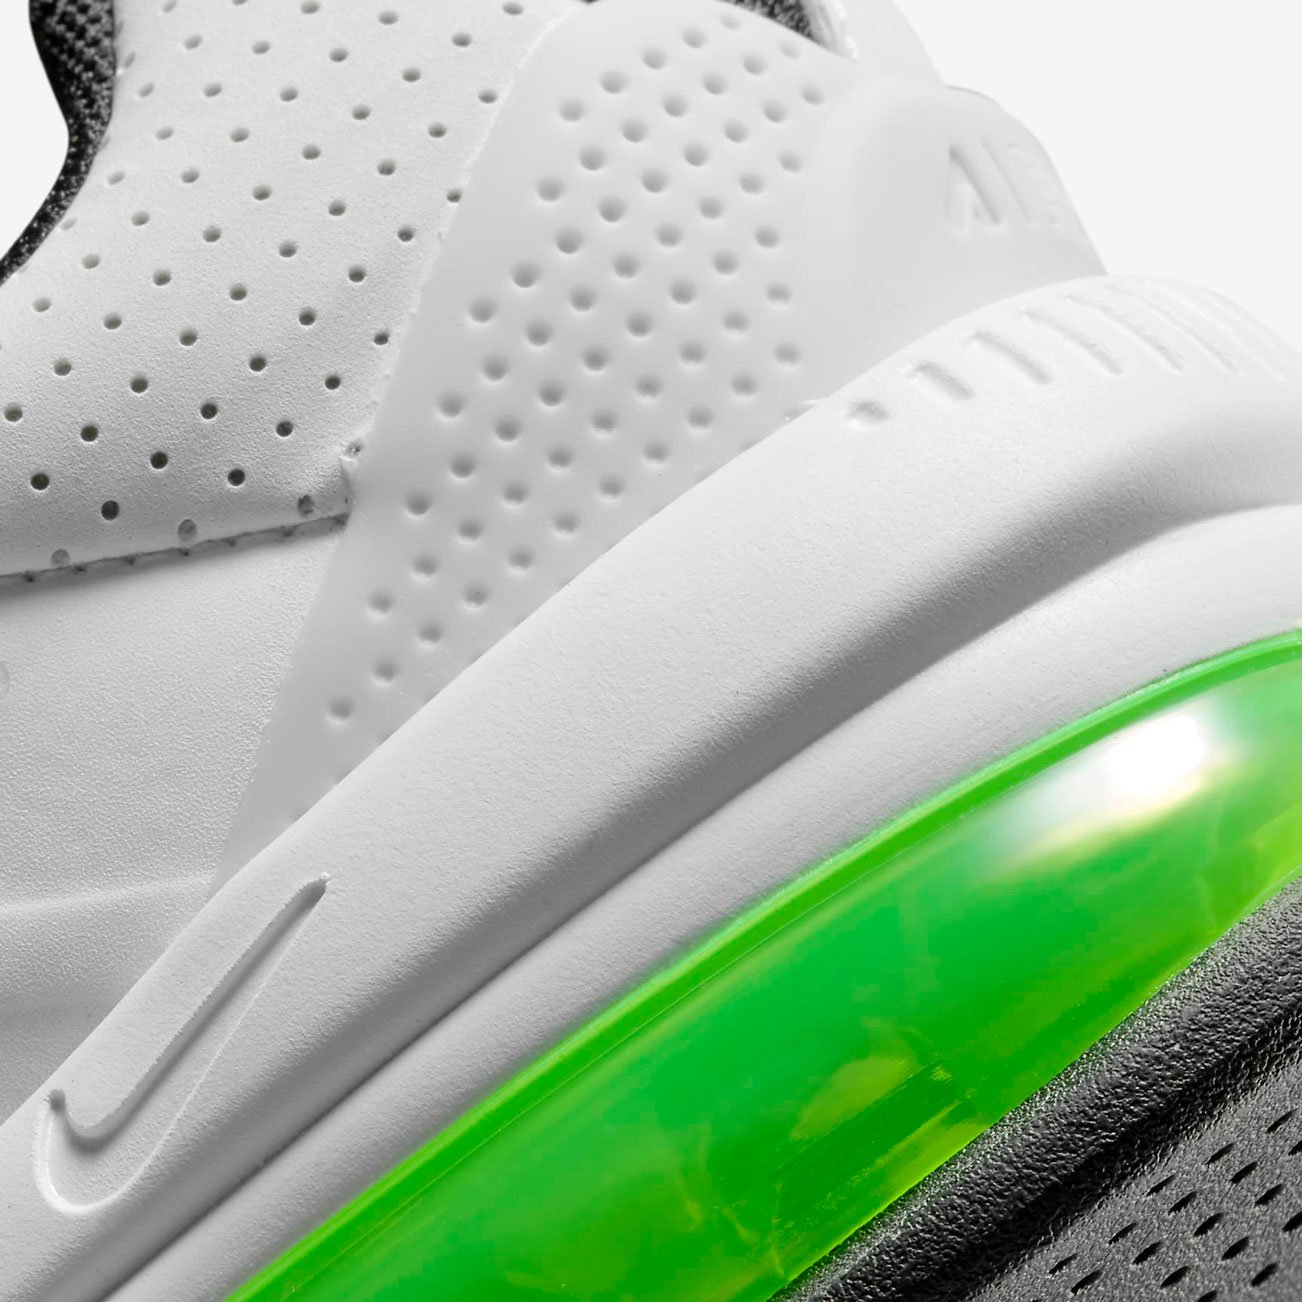 Кроссовки десткие Nike Air Max Genome